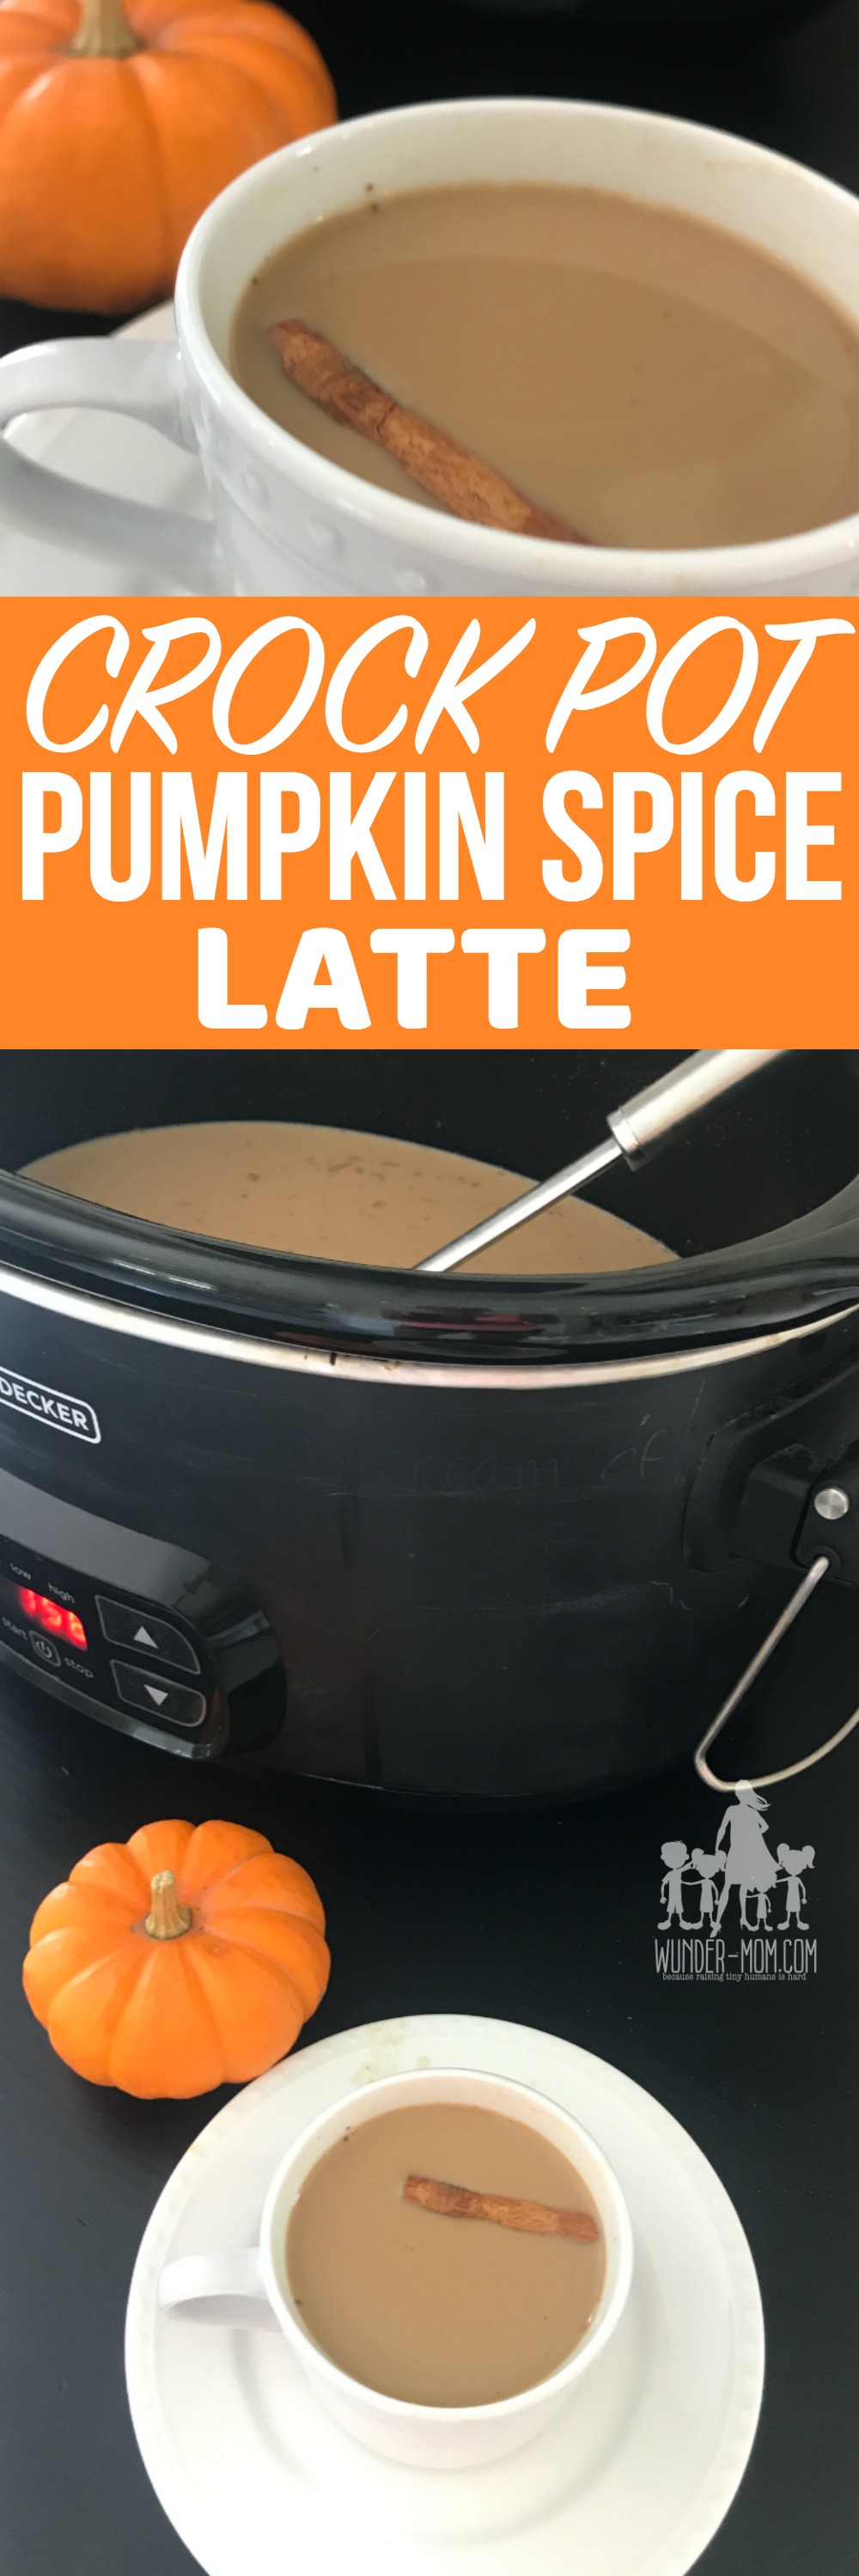 crock pot pumpkin spice latte